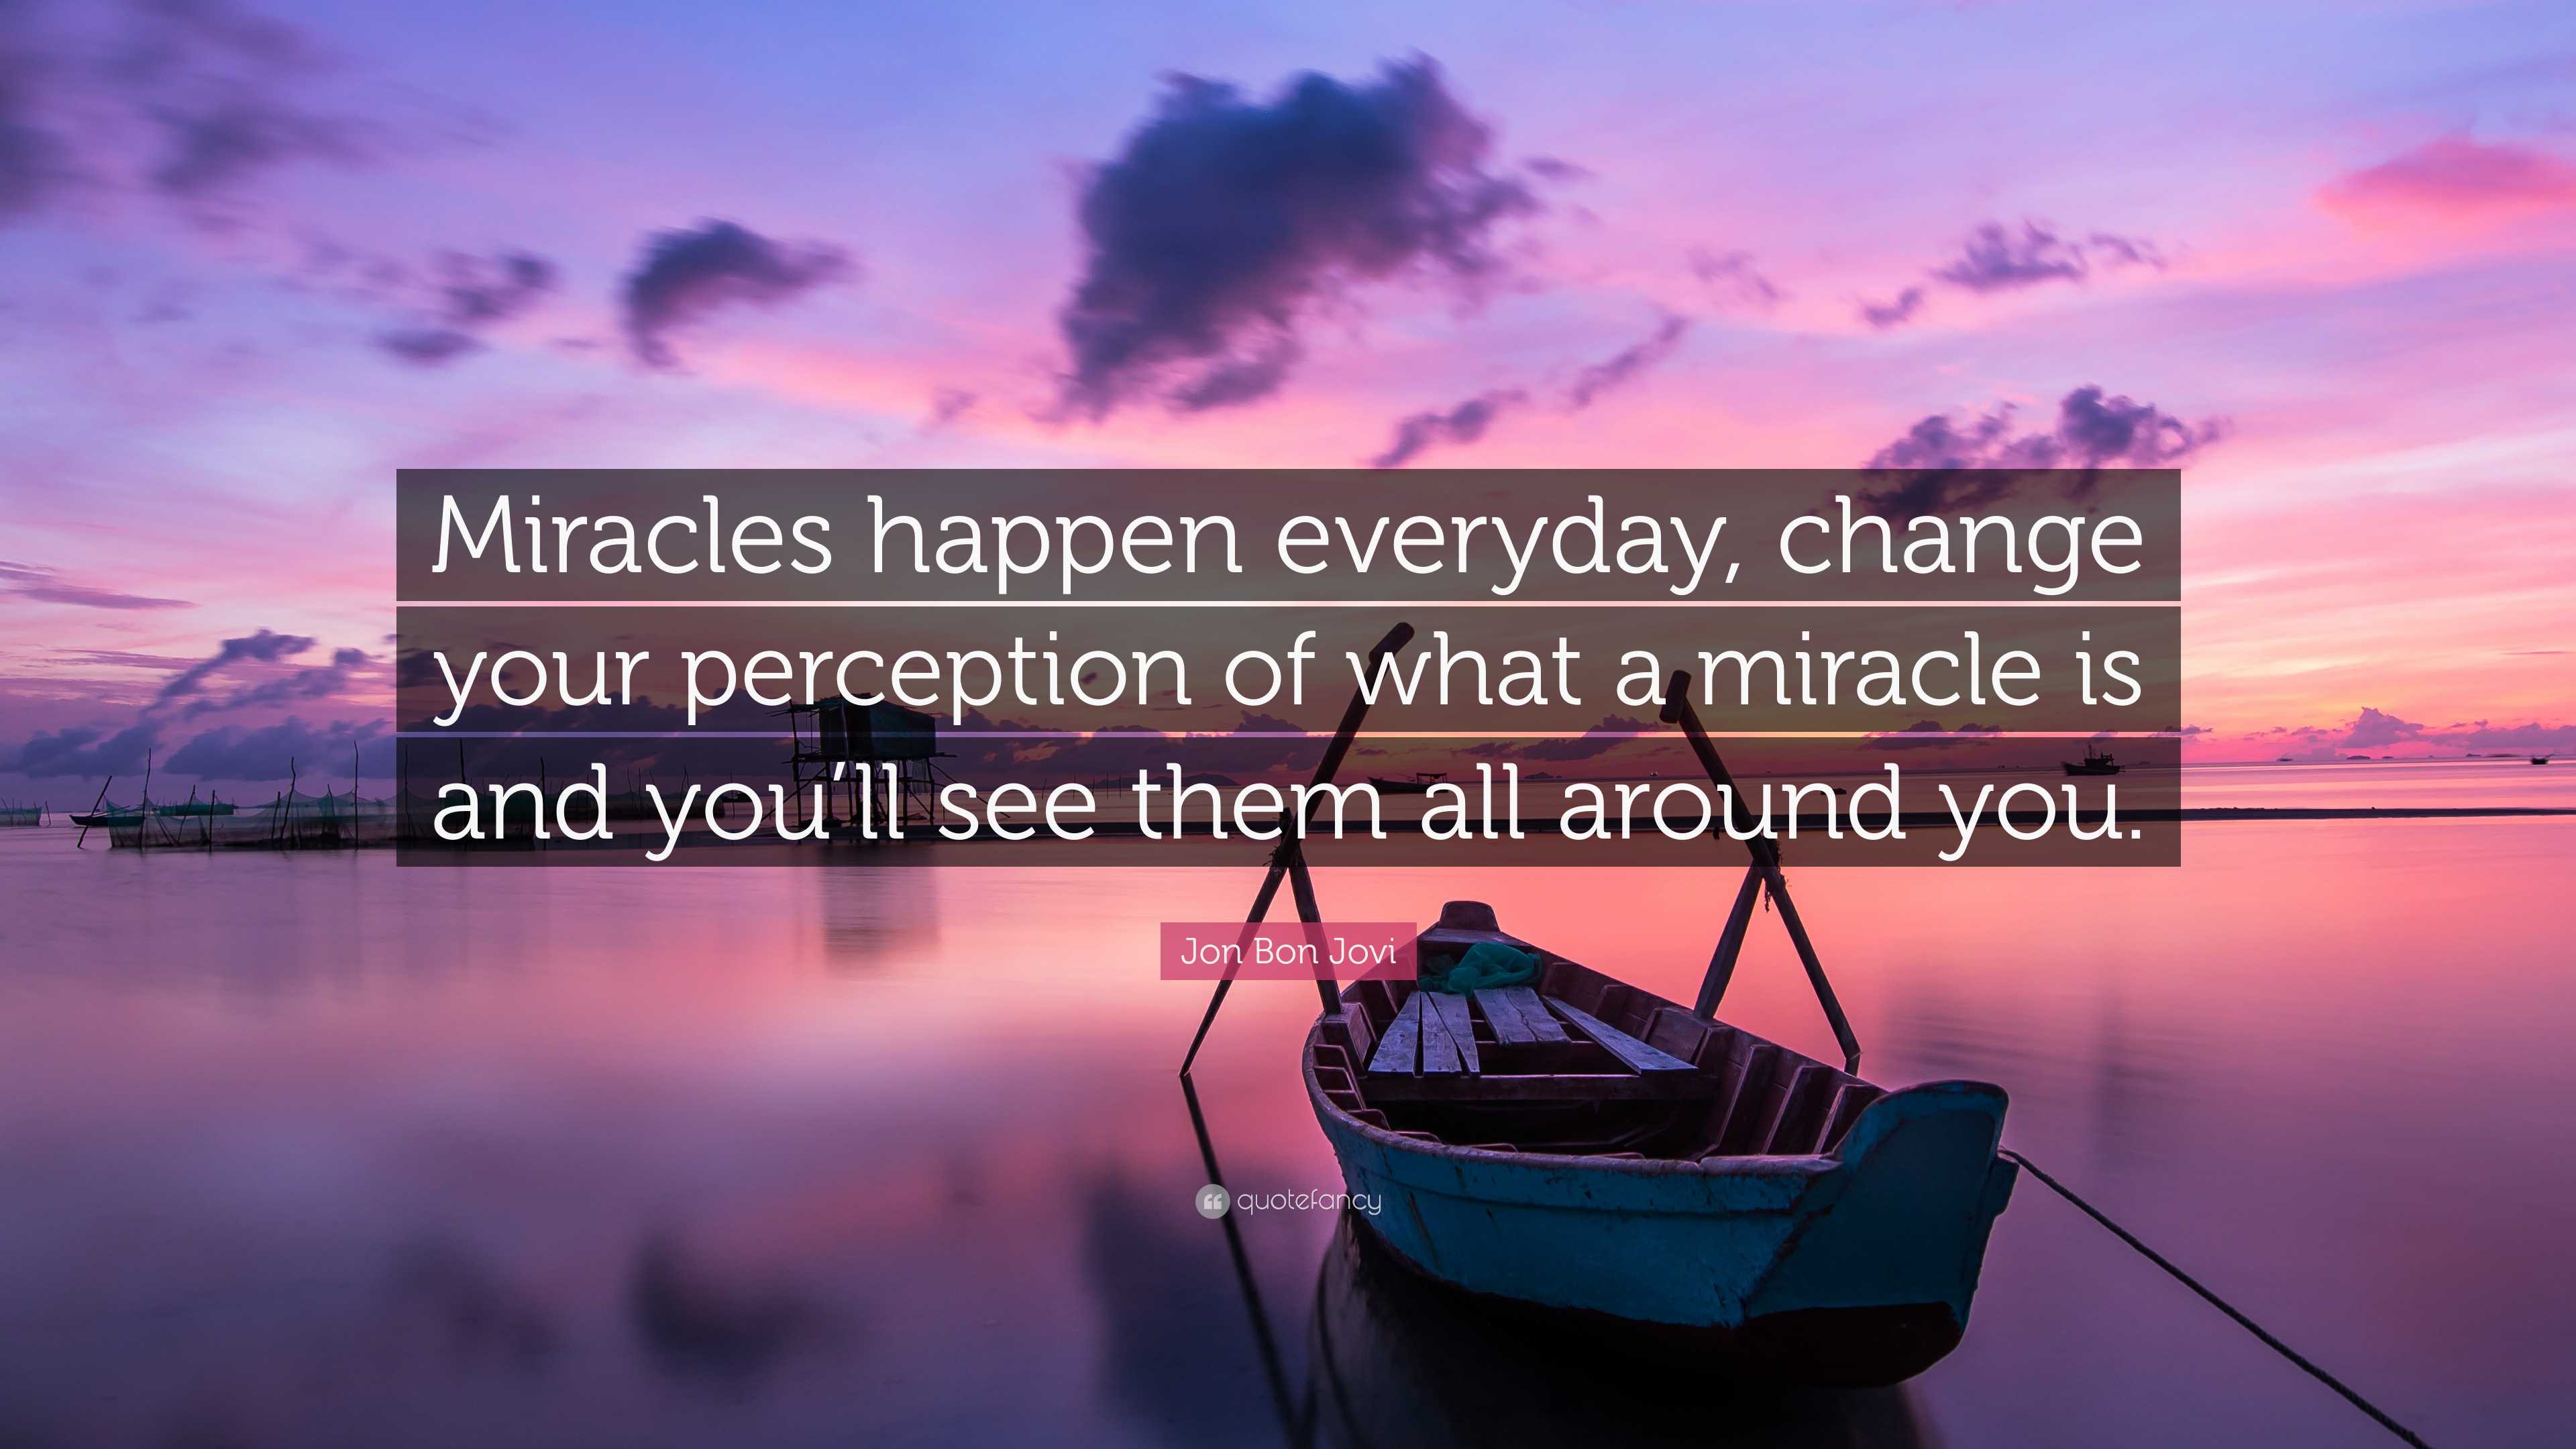 Jon Bon Jovi - Miracles happen everyday, change your